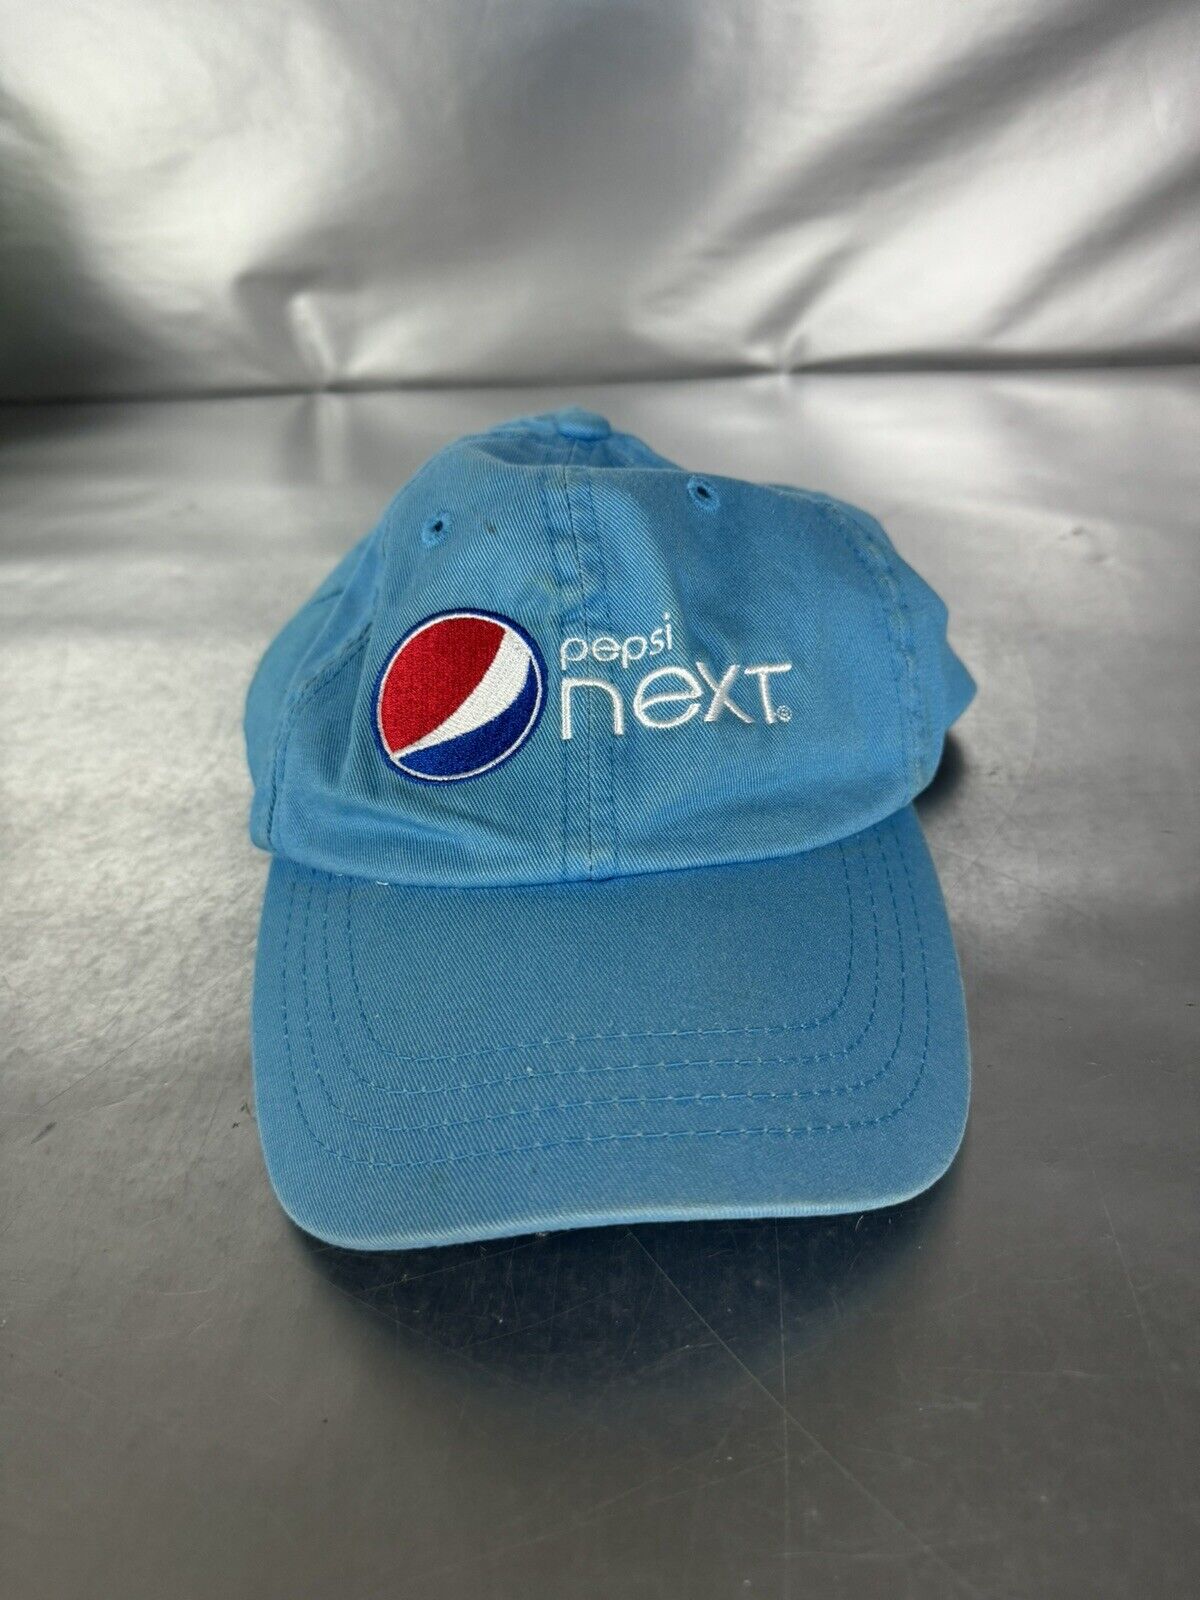 New Pepsi Next Hat Cap Cola Soda Pop Embroidered Adjustable Strap Back Stevia